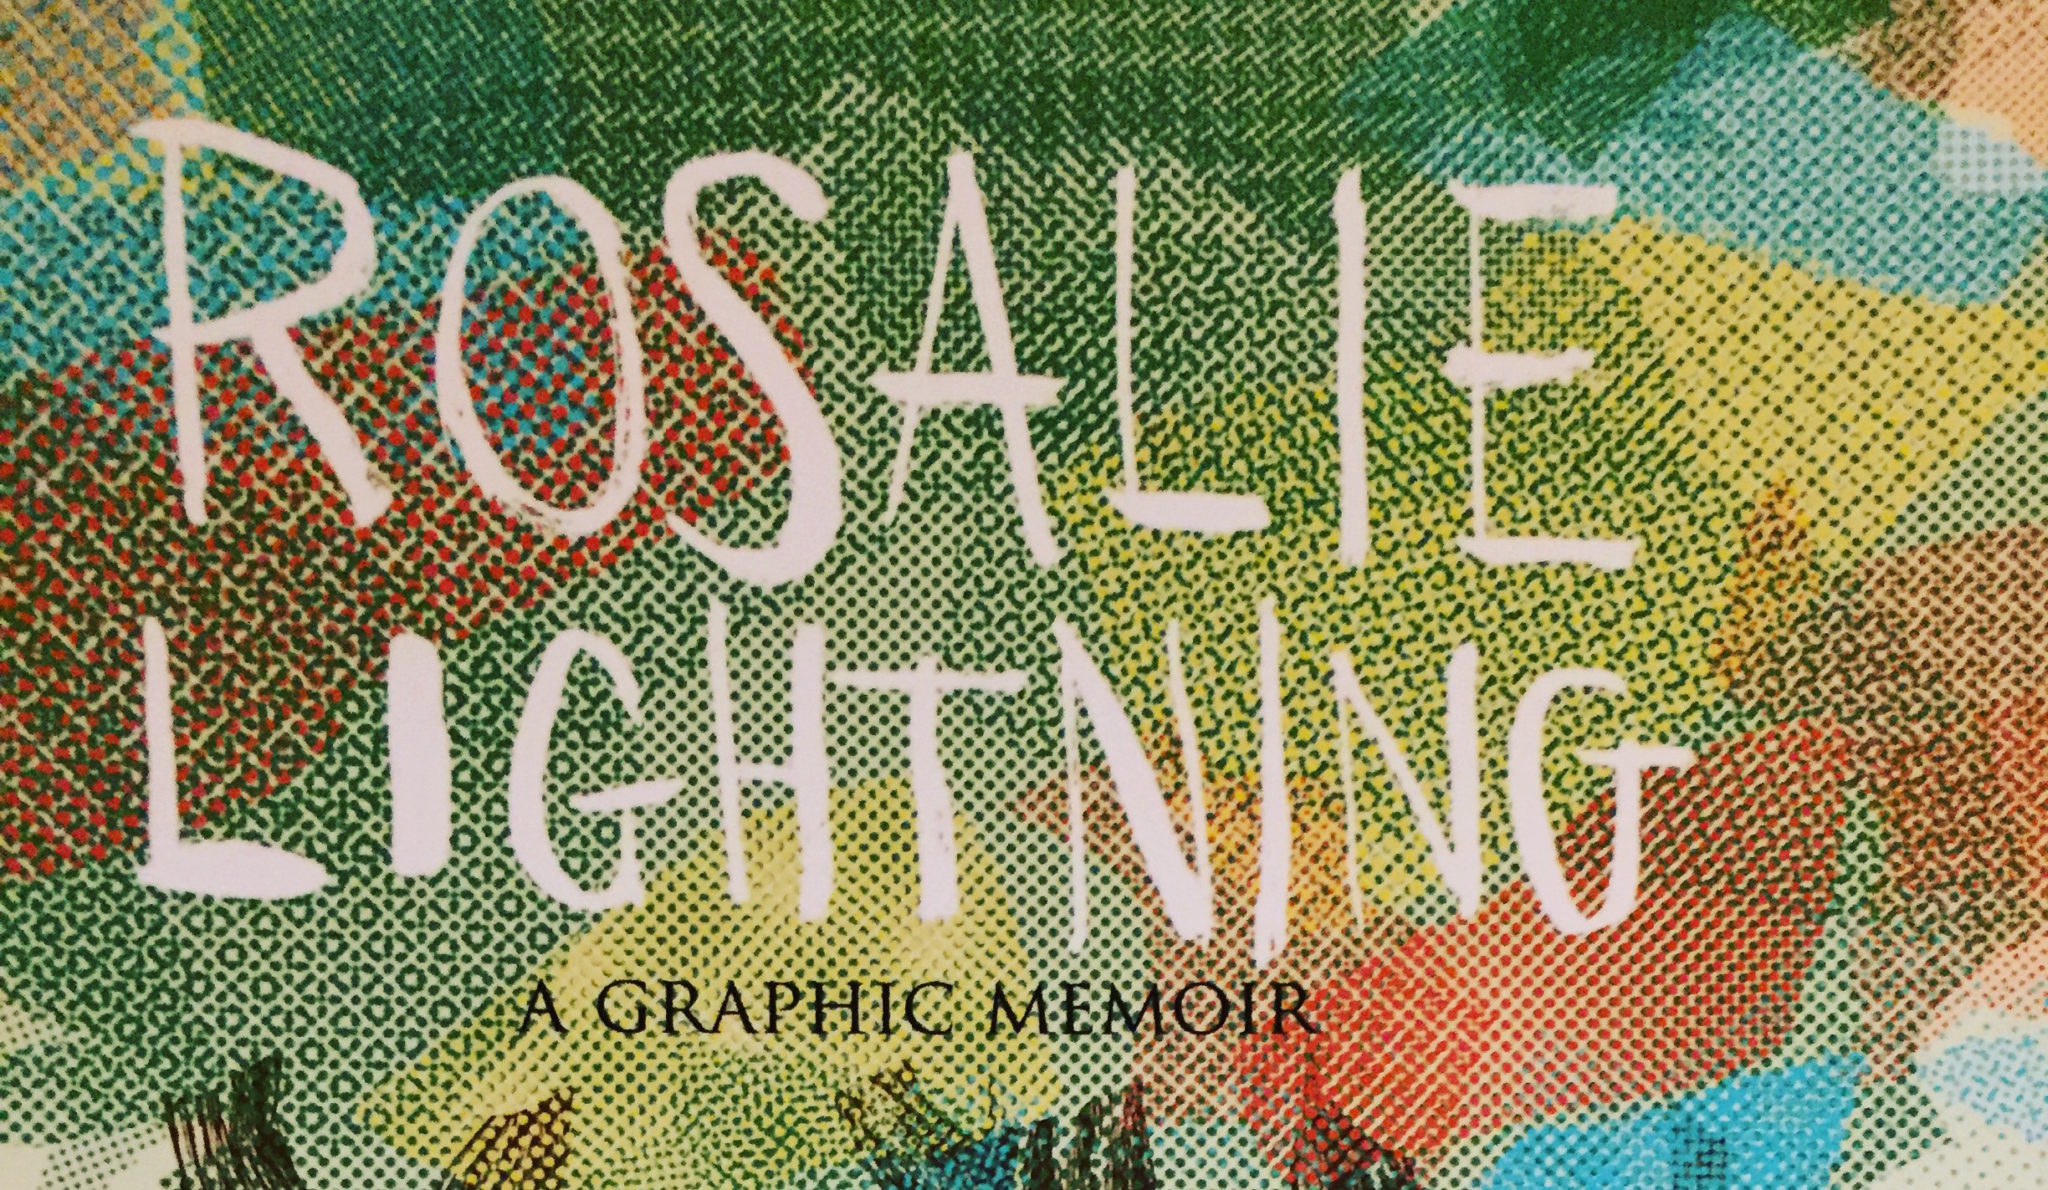 Rosalie Lightning by Tom Hart